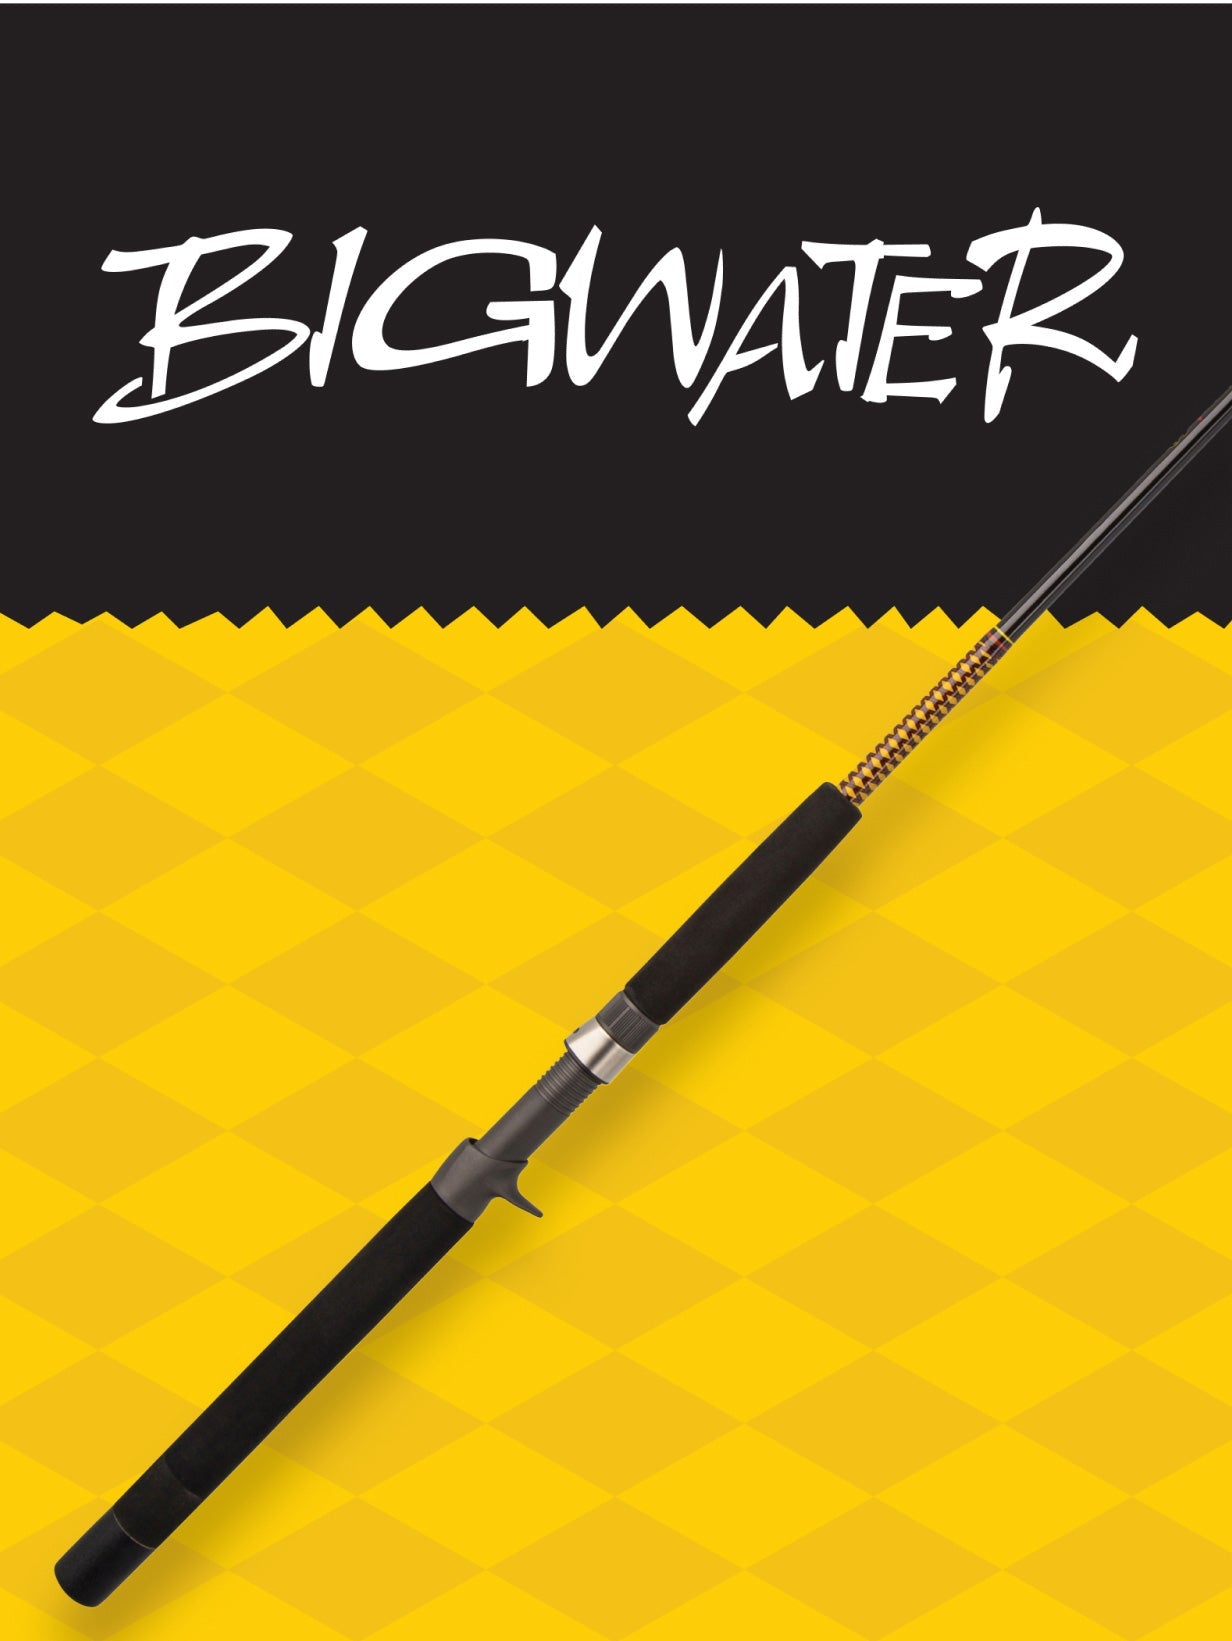 Ugly Stik Bigwater